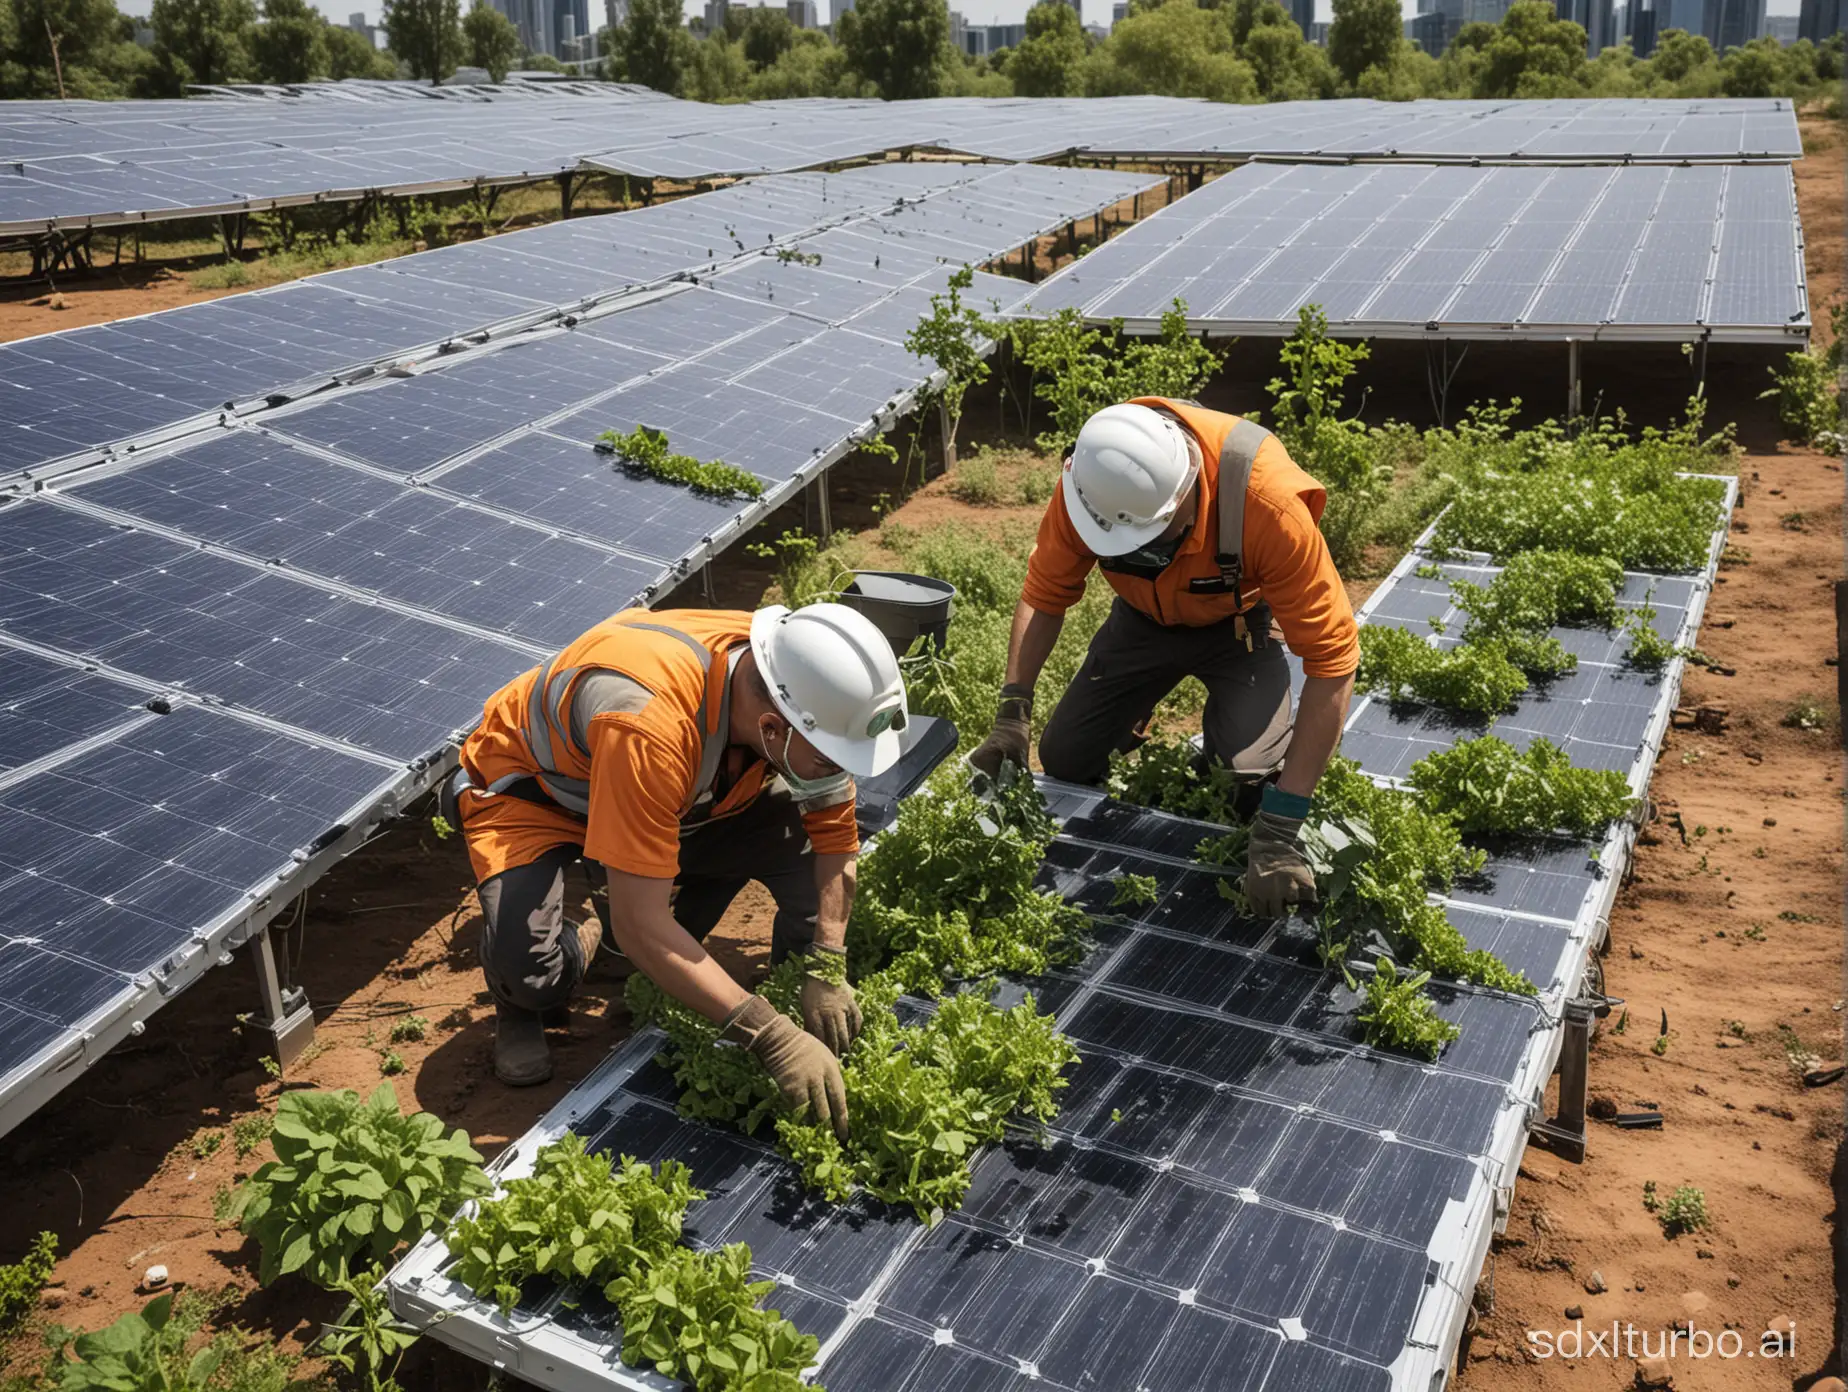 Solarpunk-Universe-Workers-Maintaining-Solar-Panels-Amidst-Lush-Greenery